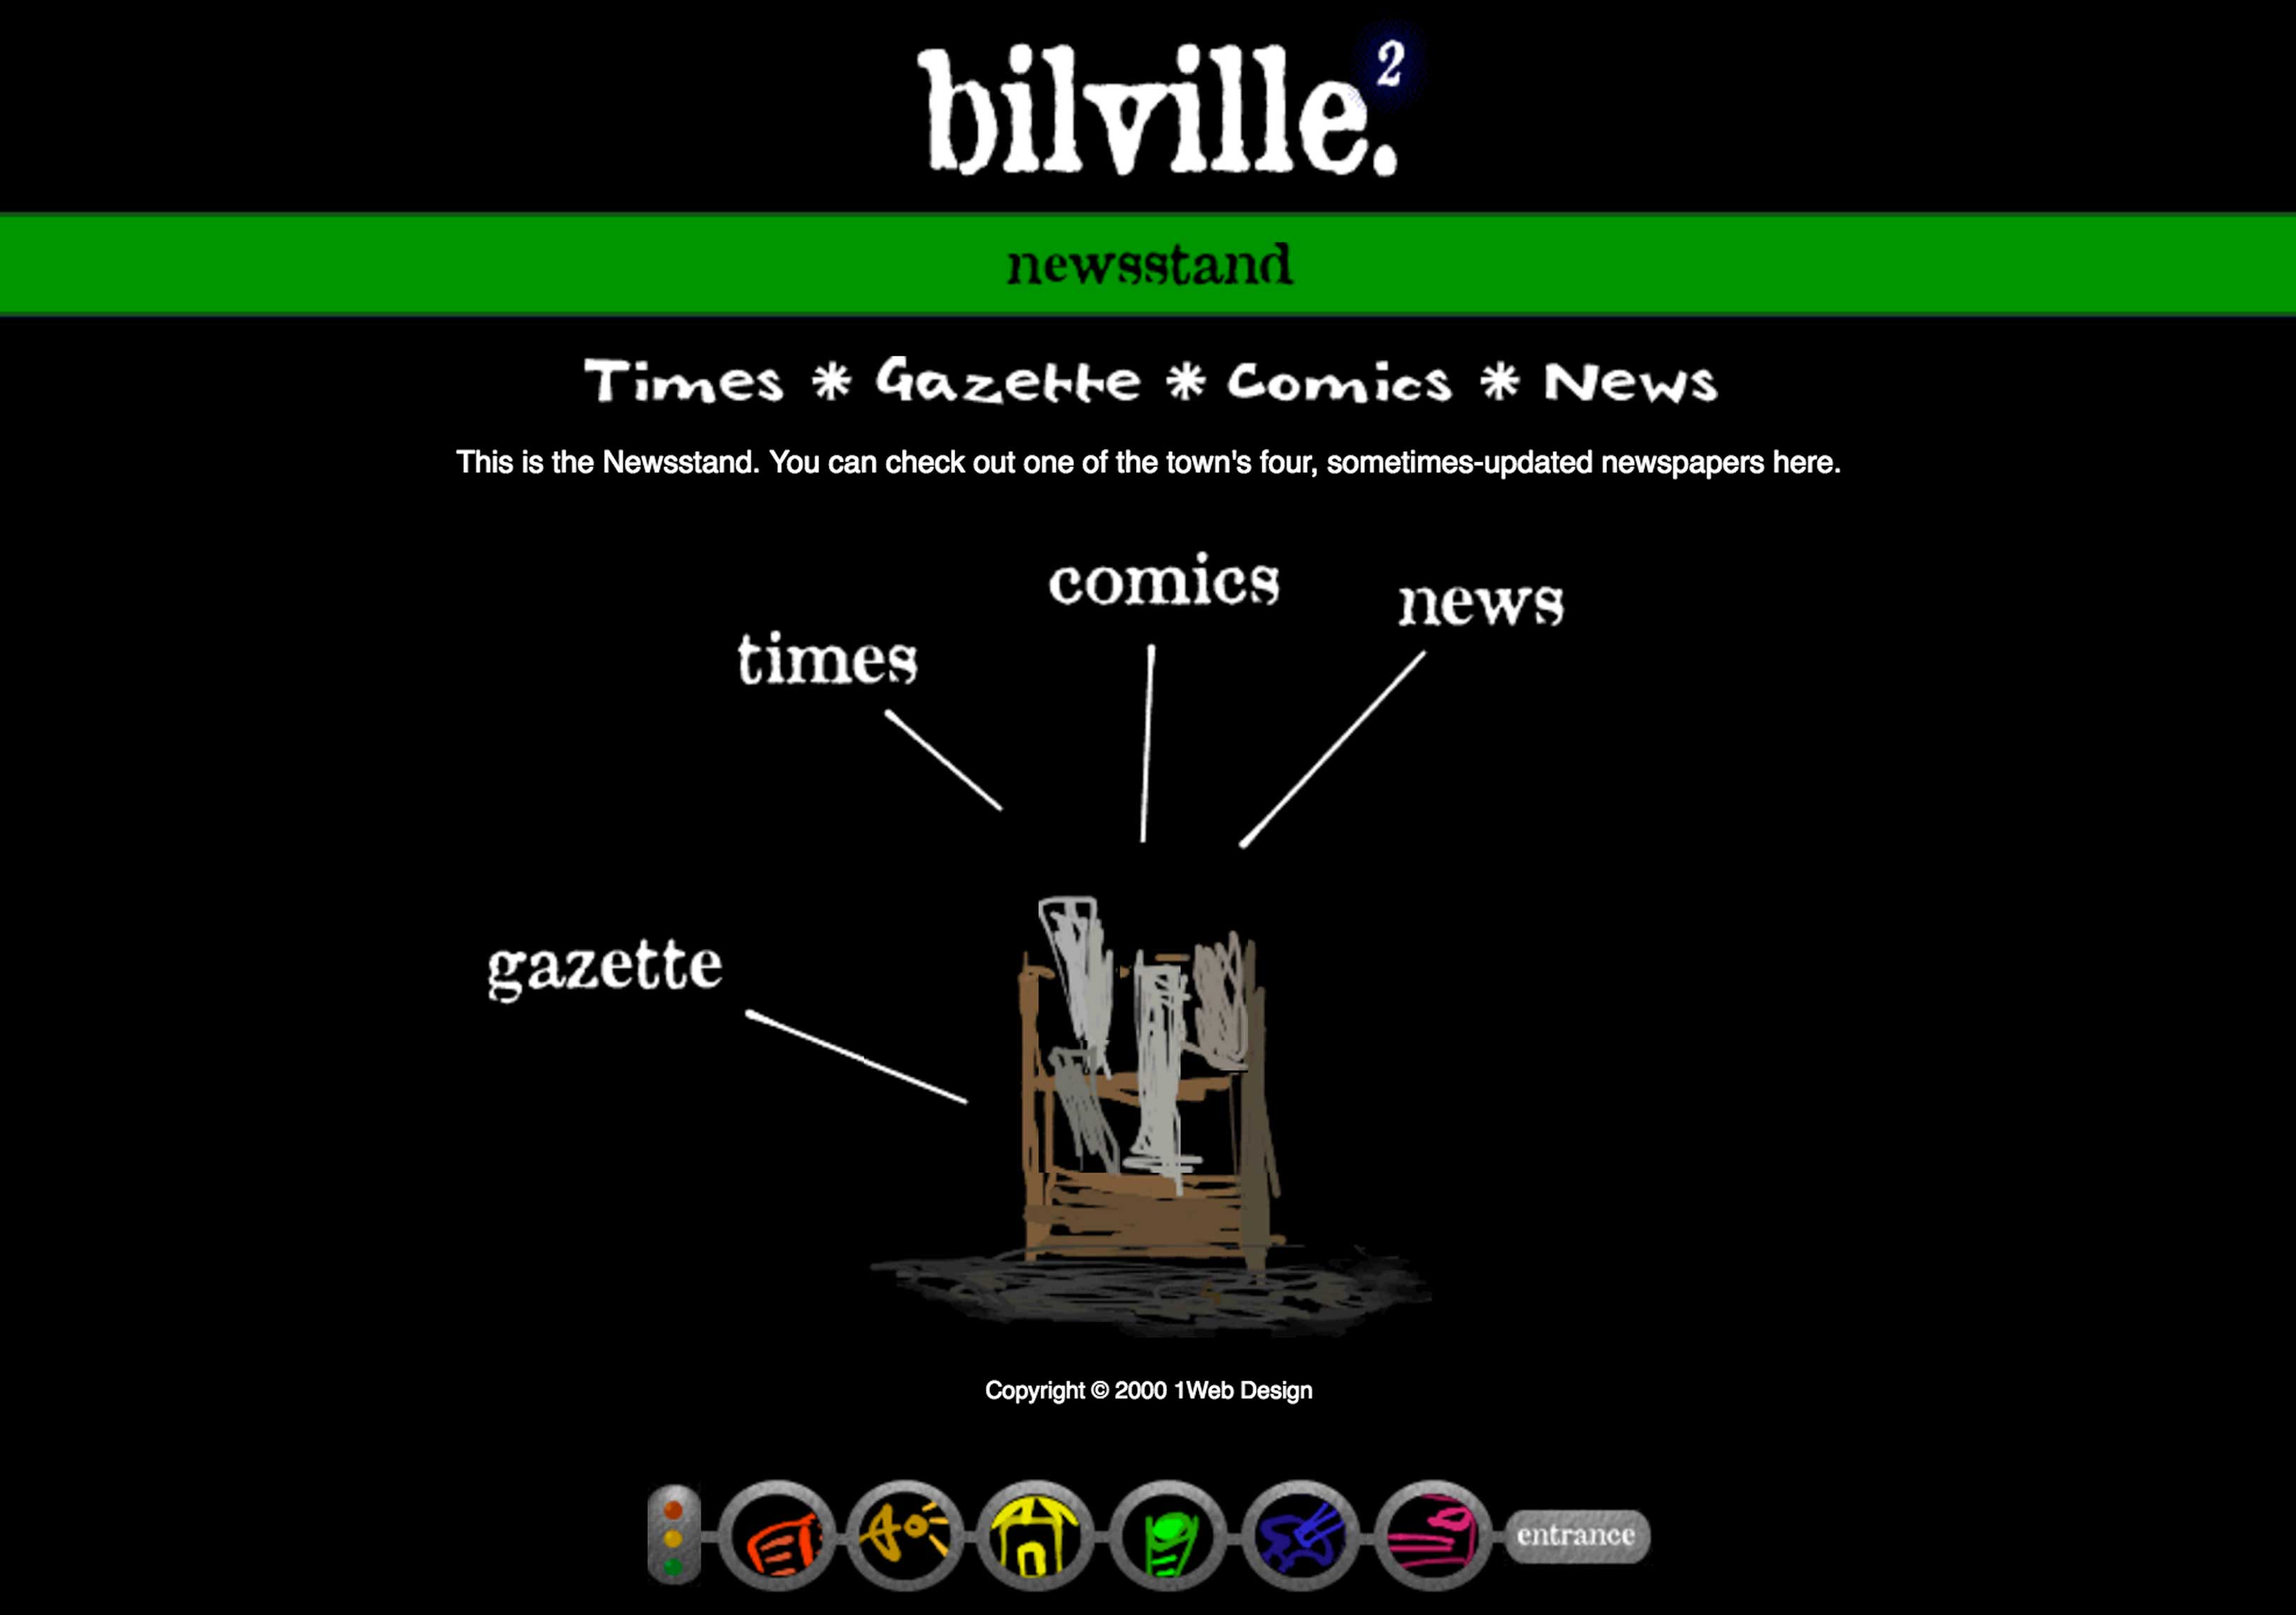 Bilville